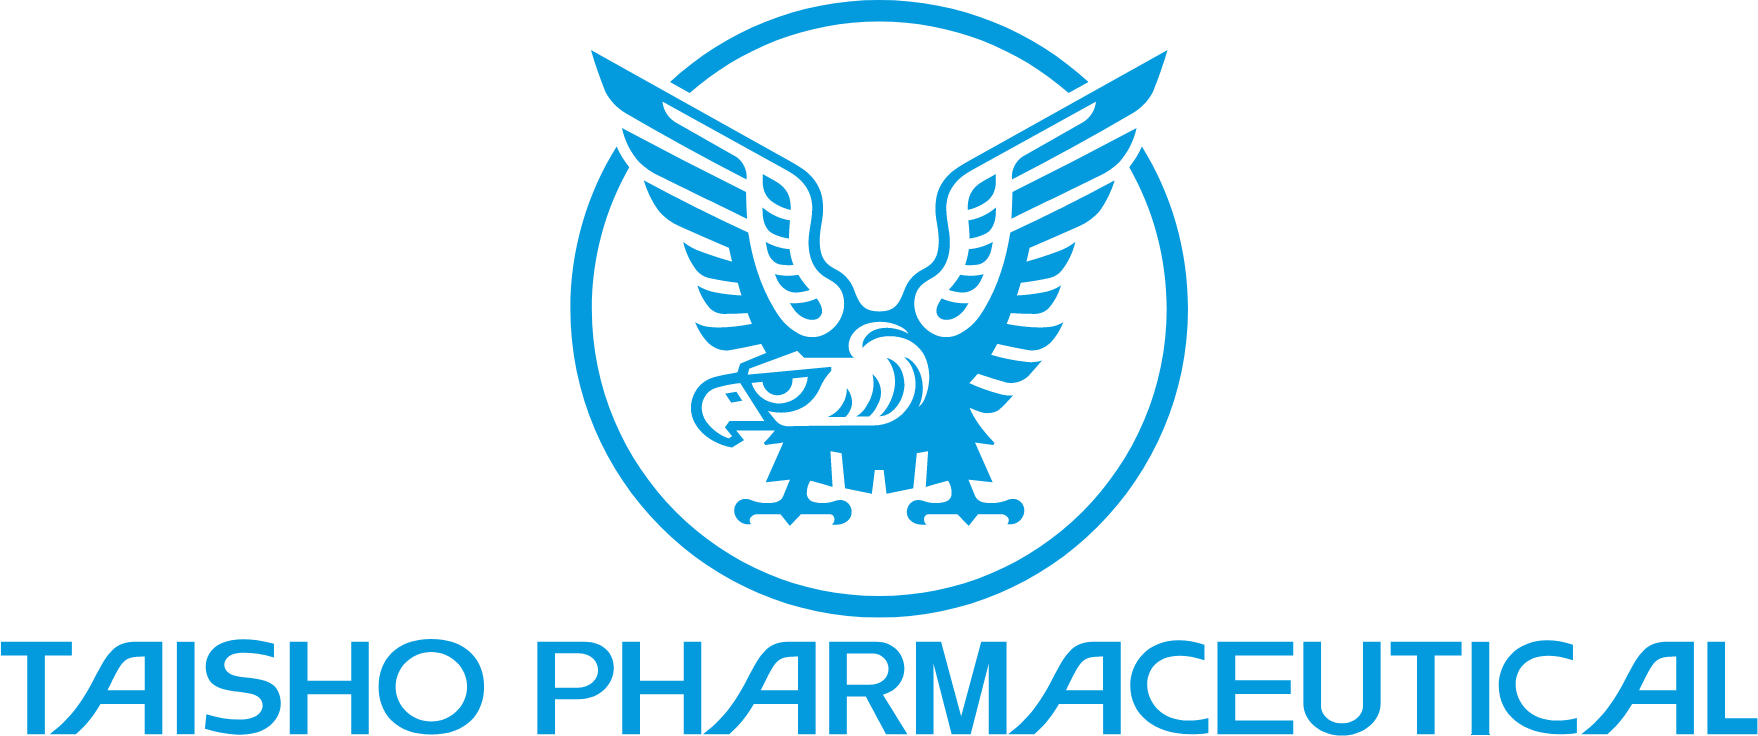 Taisho Pharmaceutical
 logo large (transparent PNG)